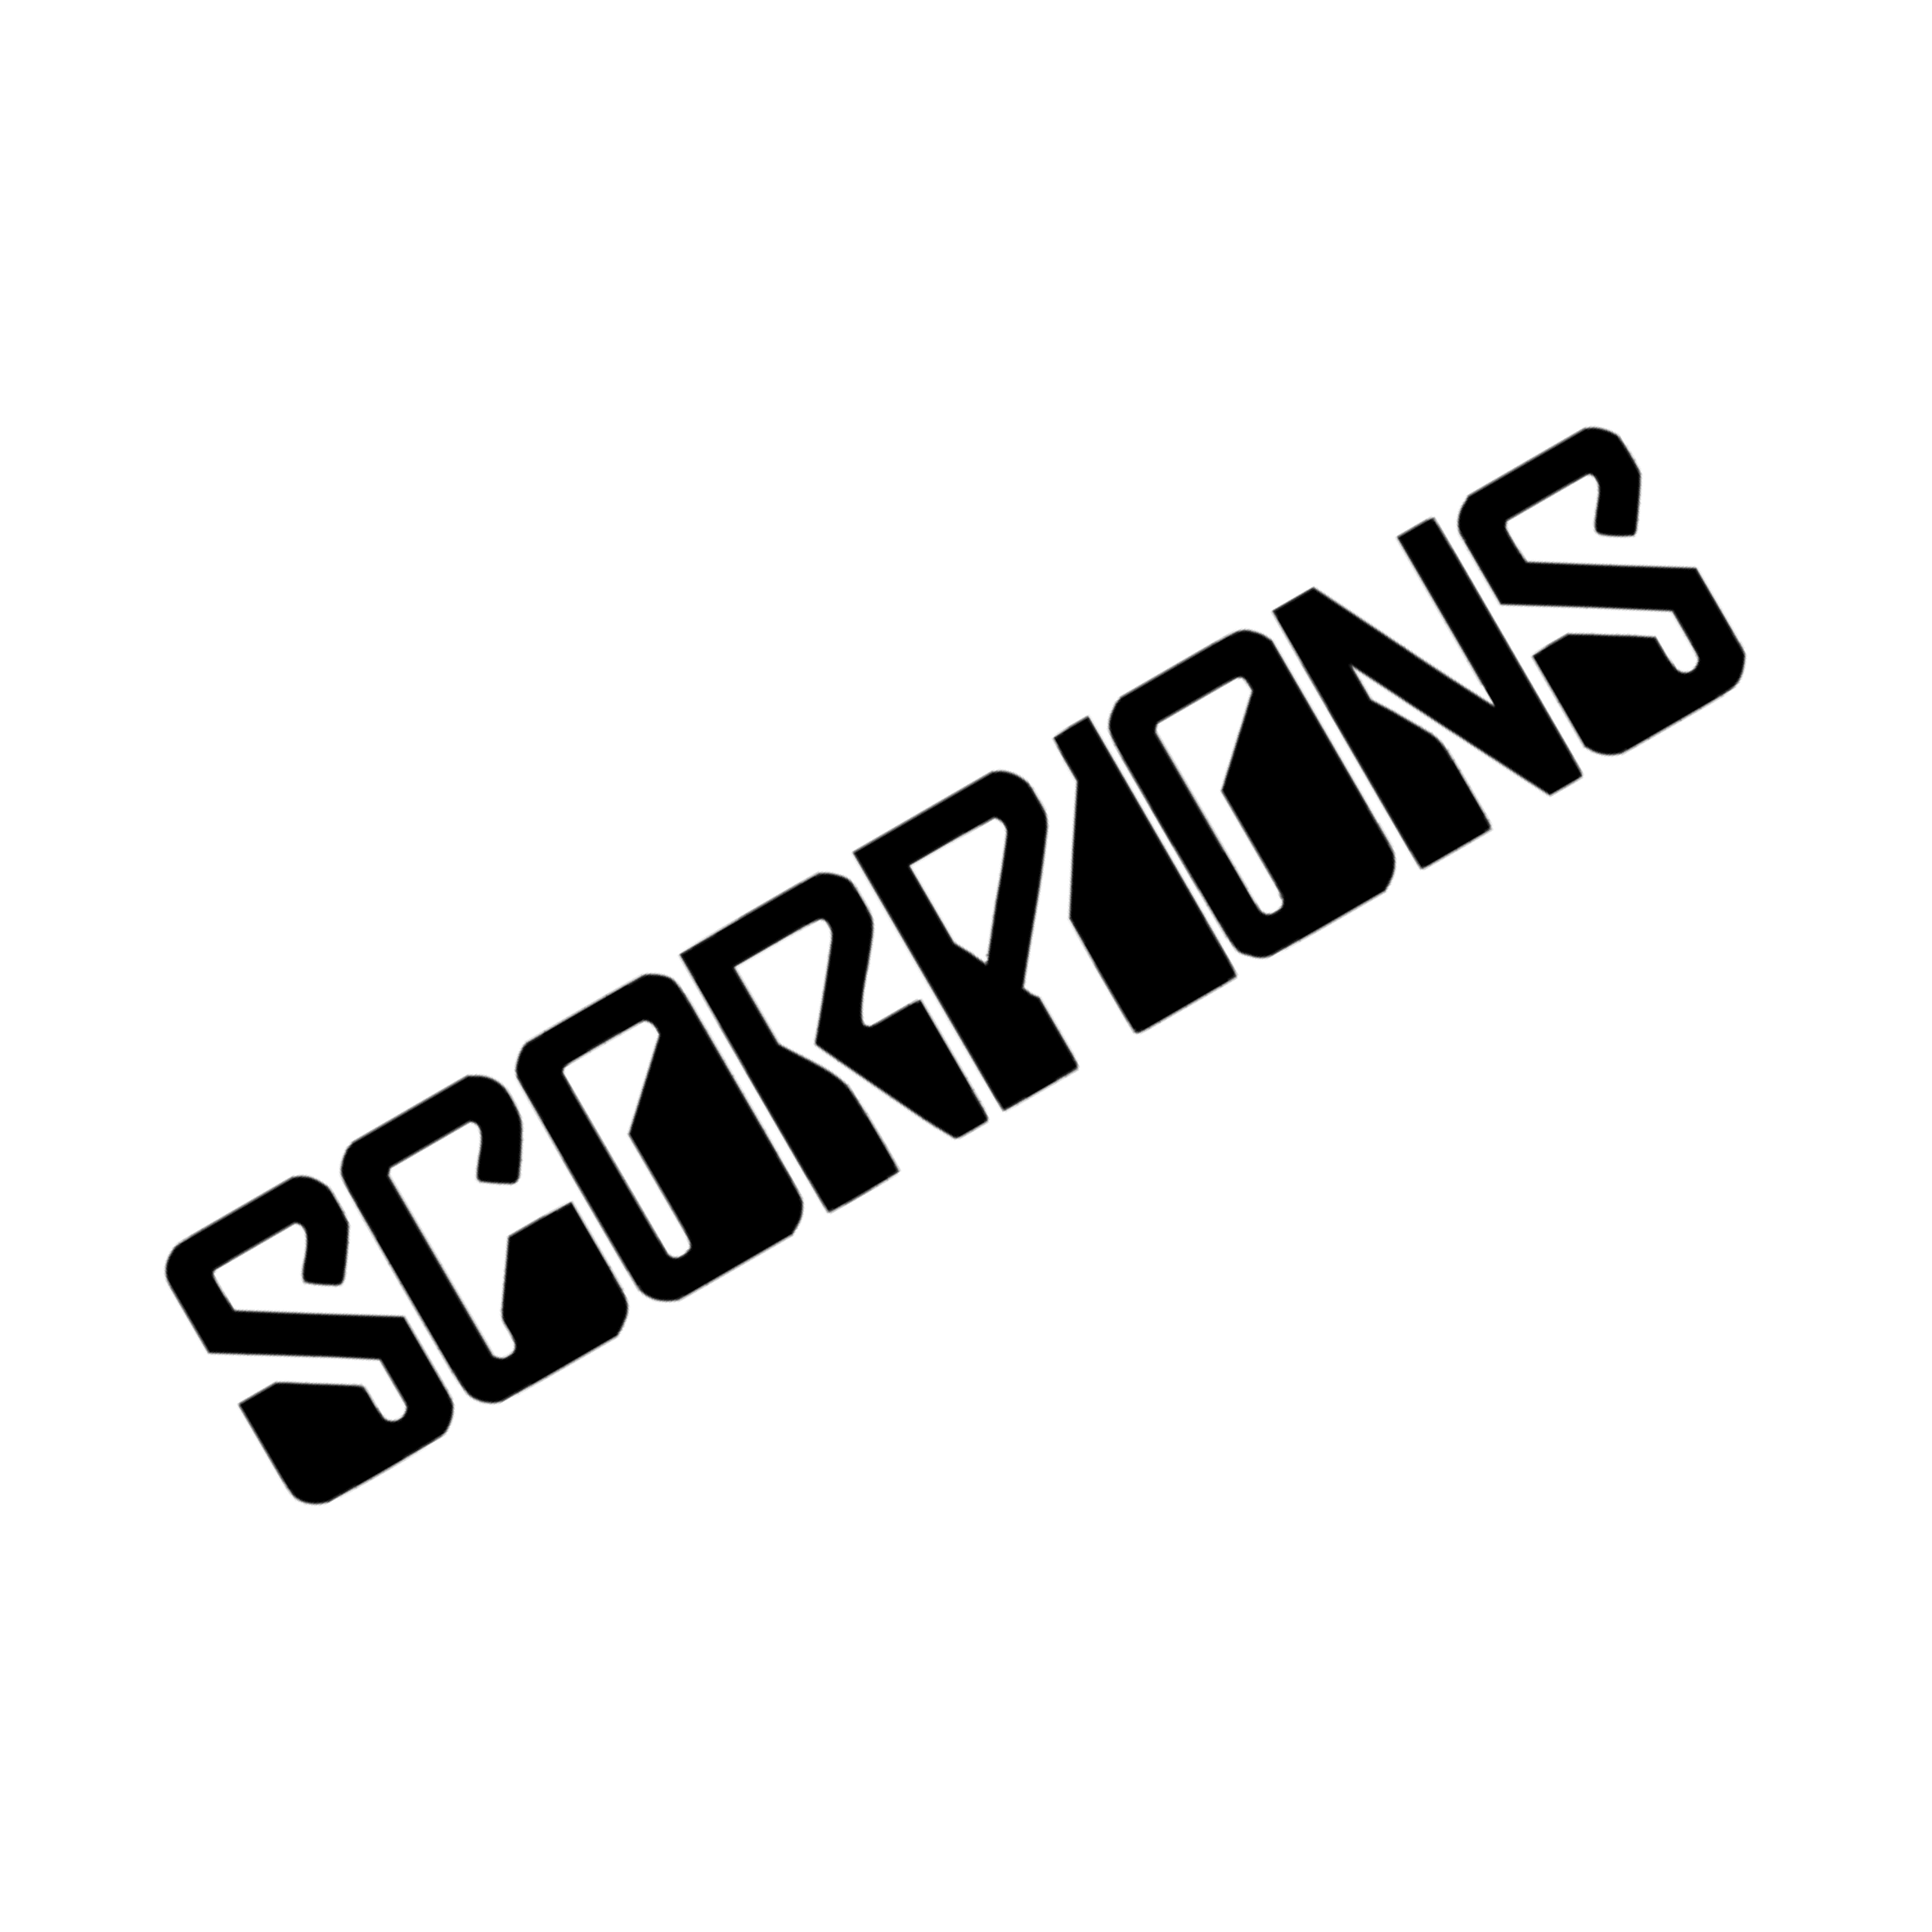 Scorpions sticker şeffaf 6 cm